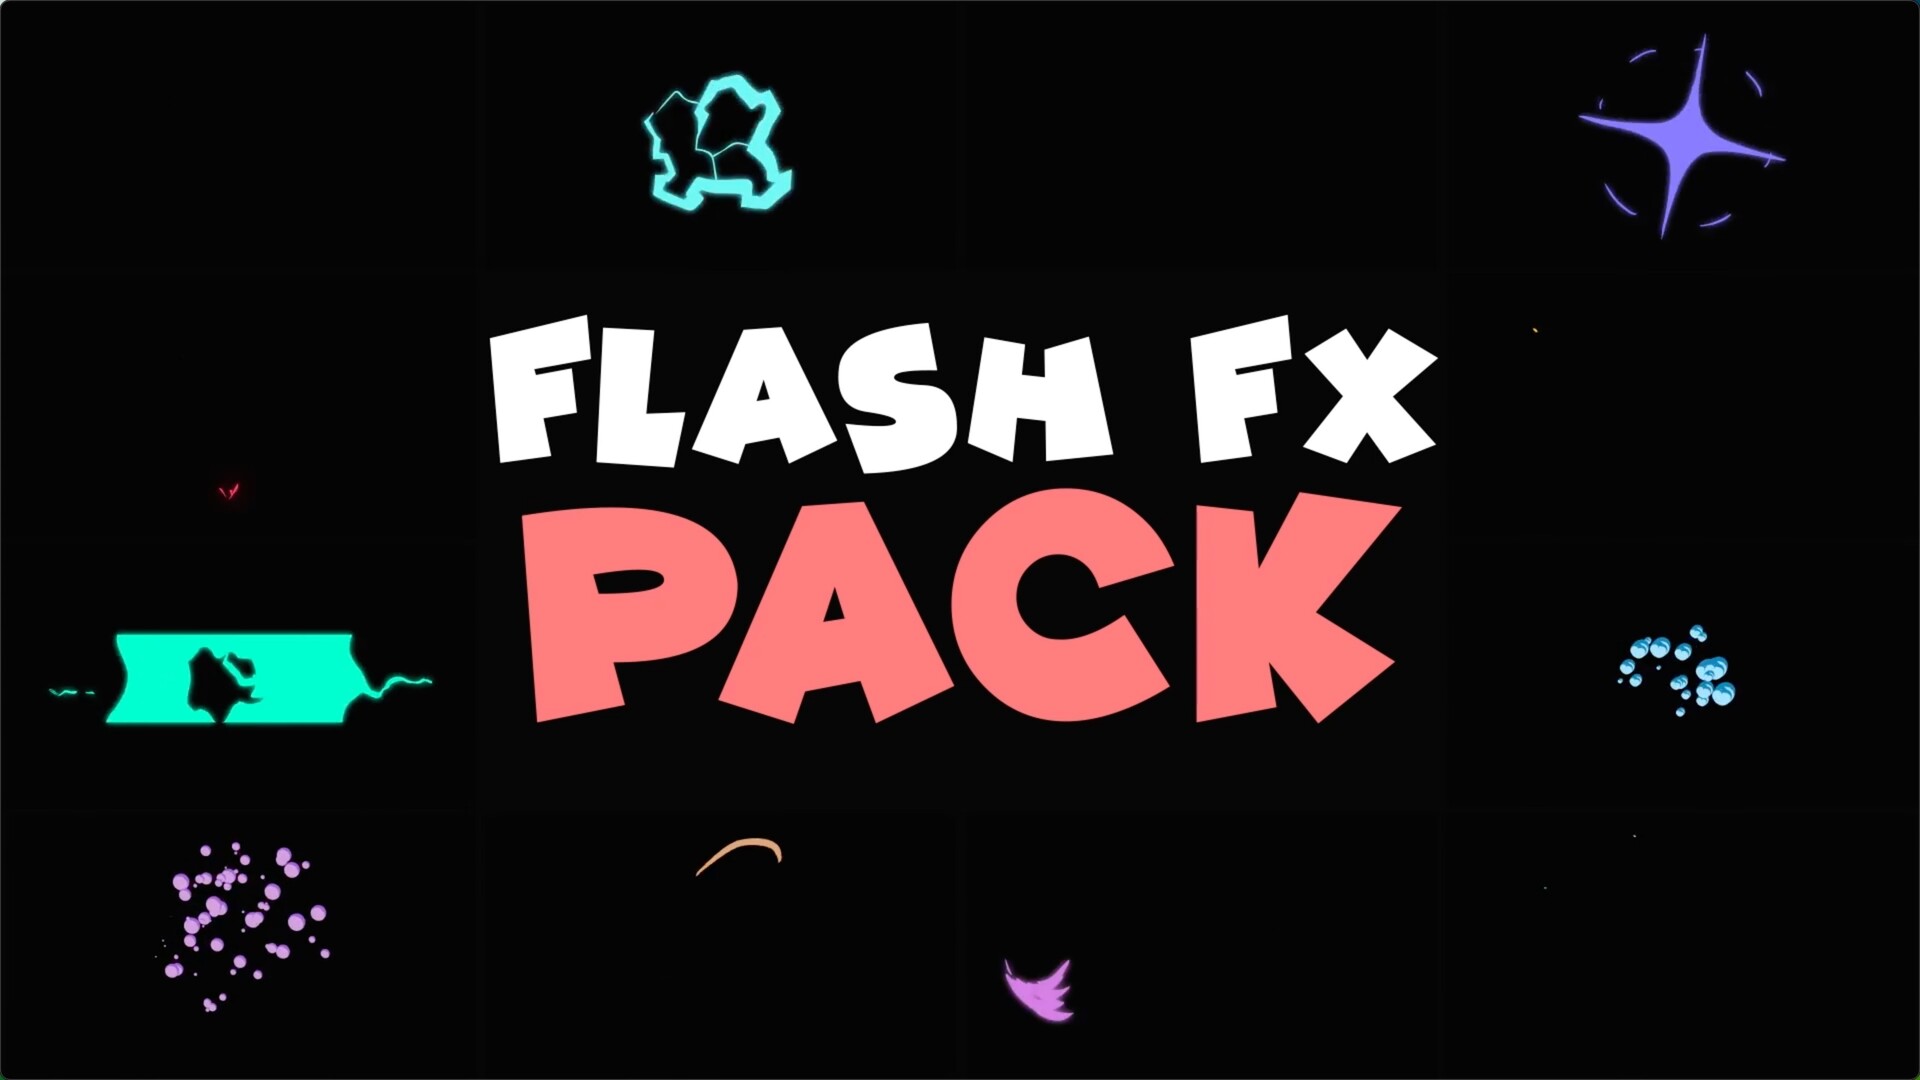 fcpx插件：12组常用动态卡通元素能量爆炸发光元素Flash FX Elements